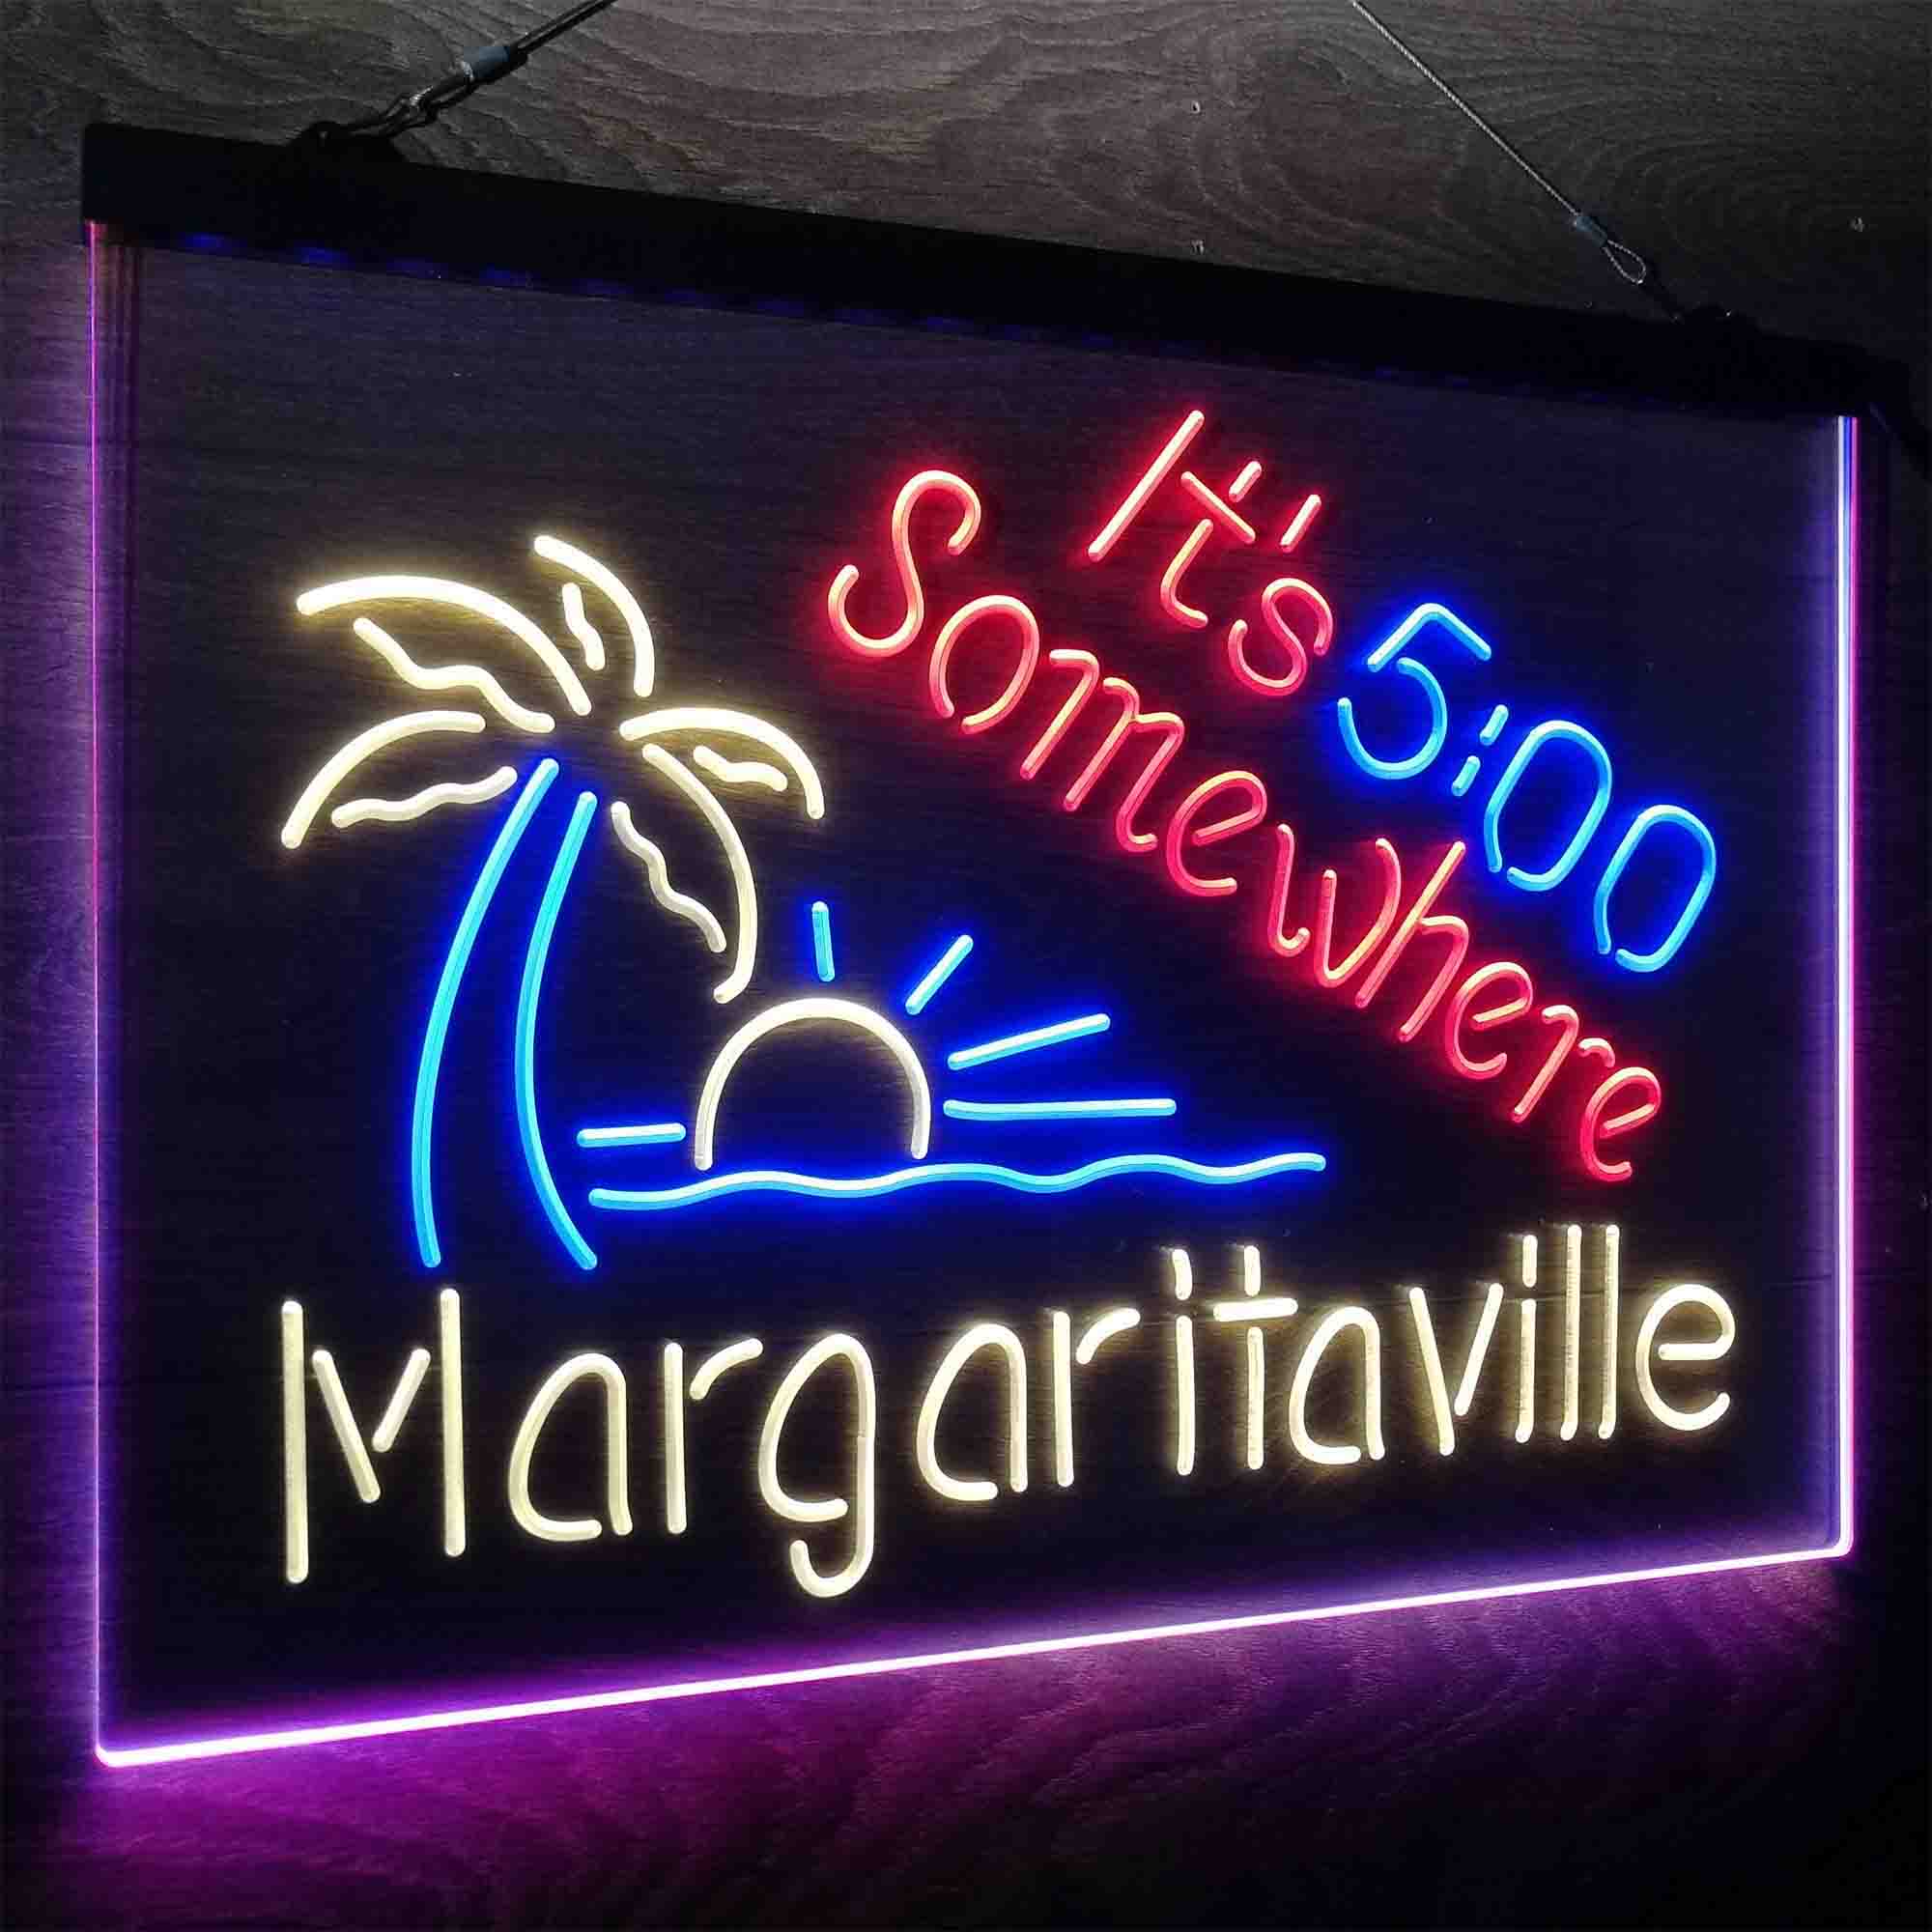 It's 500 Somewhere Margaritaville Neon LED Sign 3 Colors